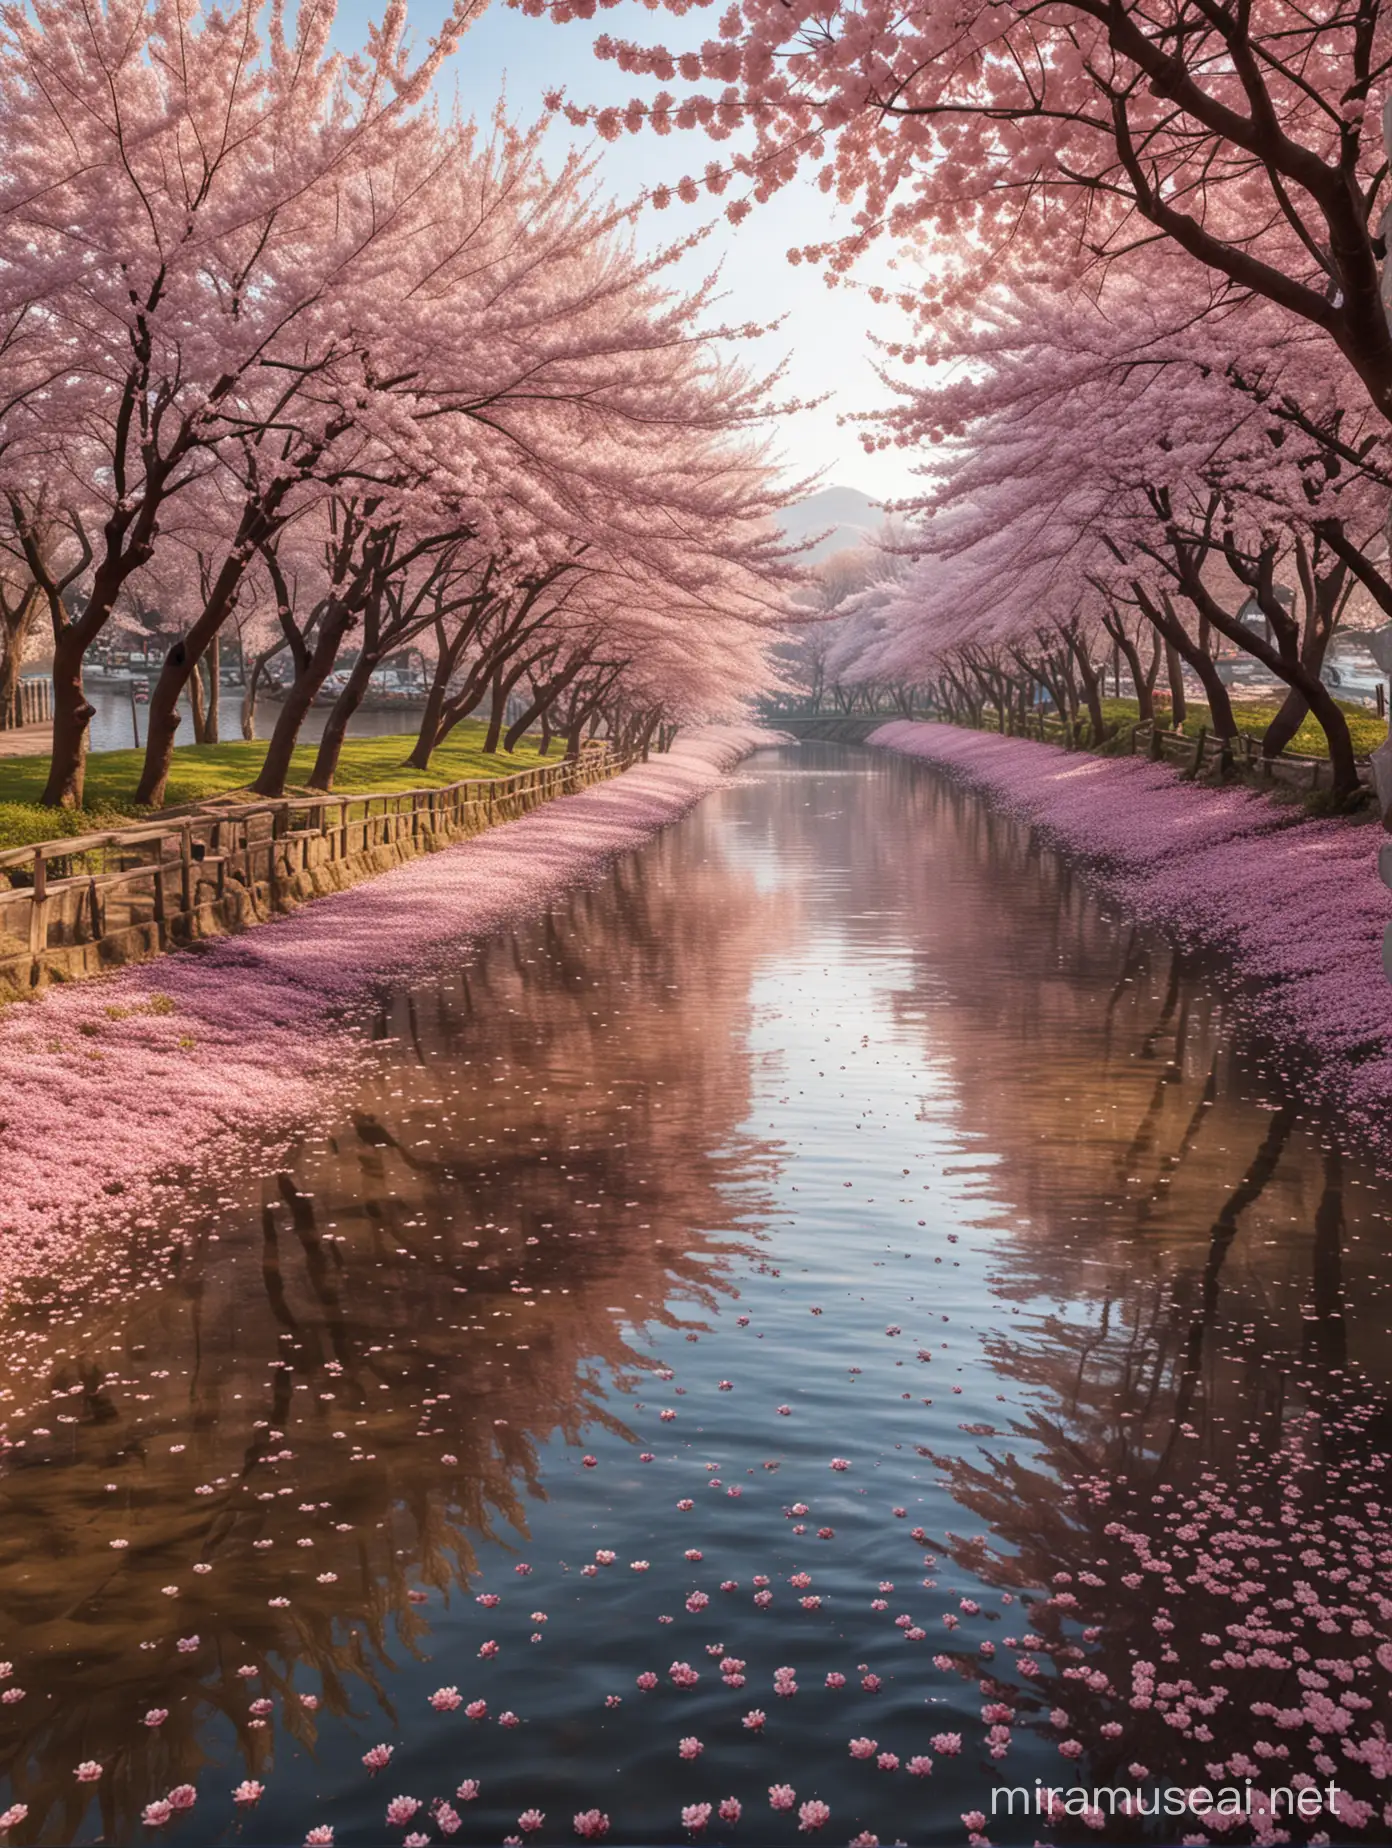 Serene Cherry Blossom River Landscape Sunlit Petals and Blossoms